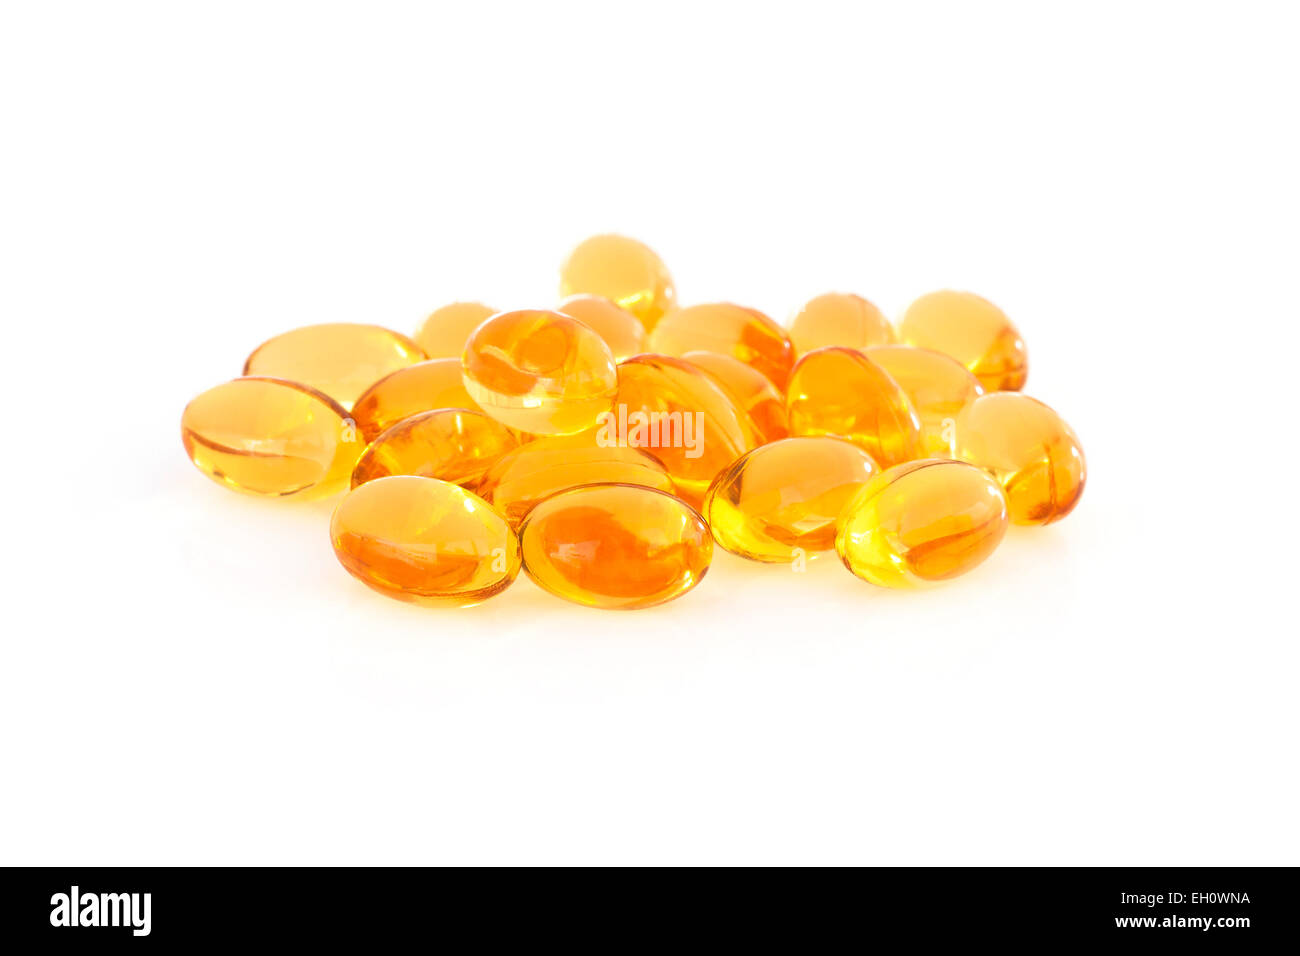 Vitamin E supplement capsules closeup on a white background Stock Photo